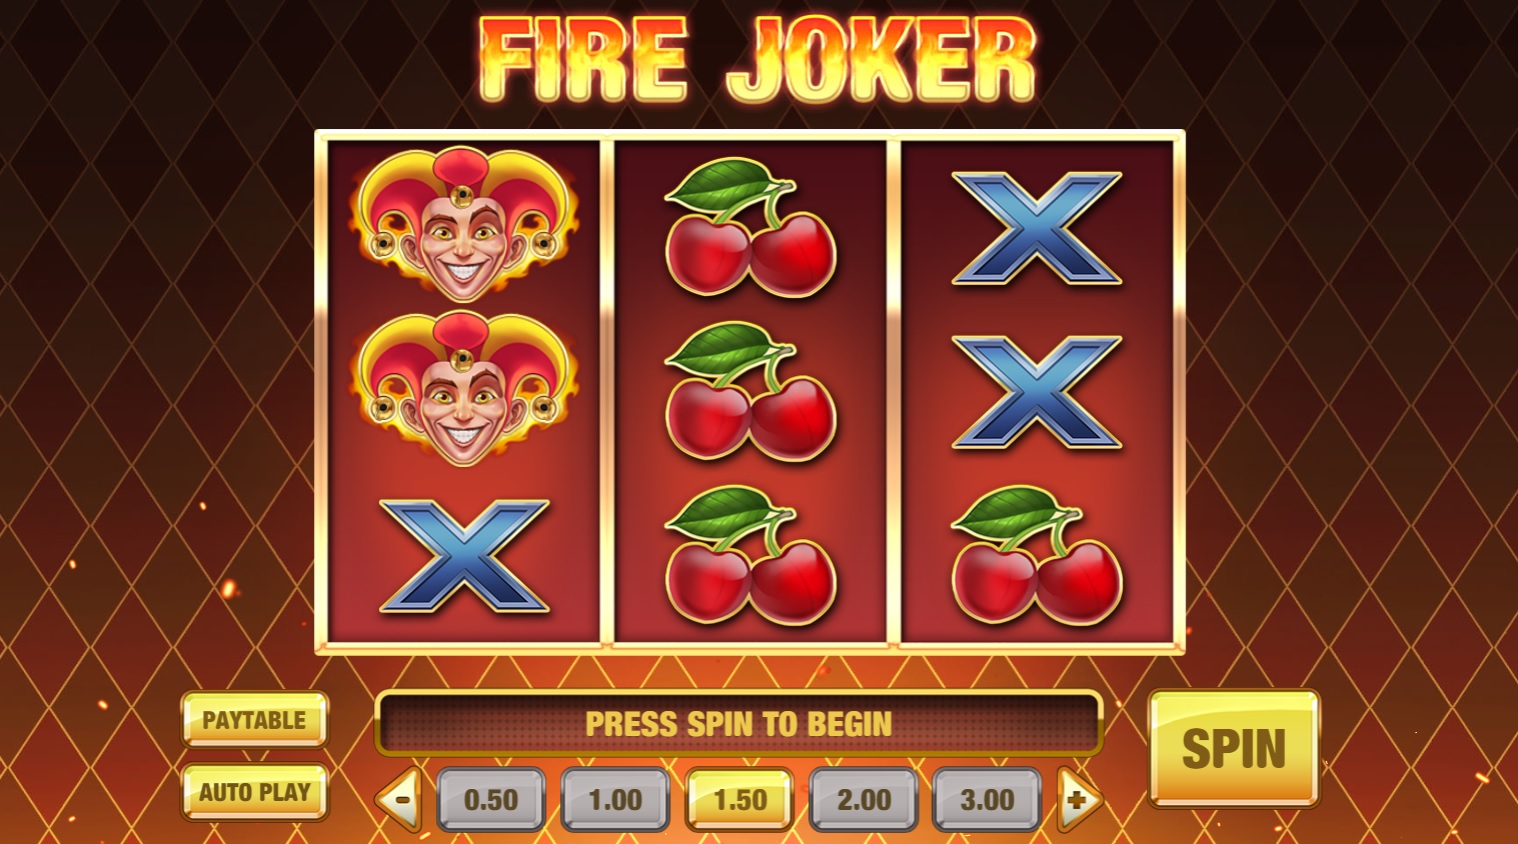 Recenzia Online Automatu Fire Joker